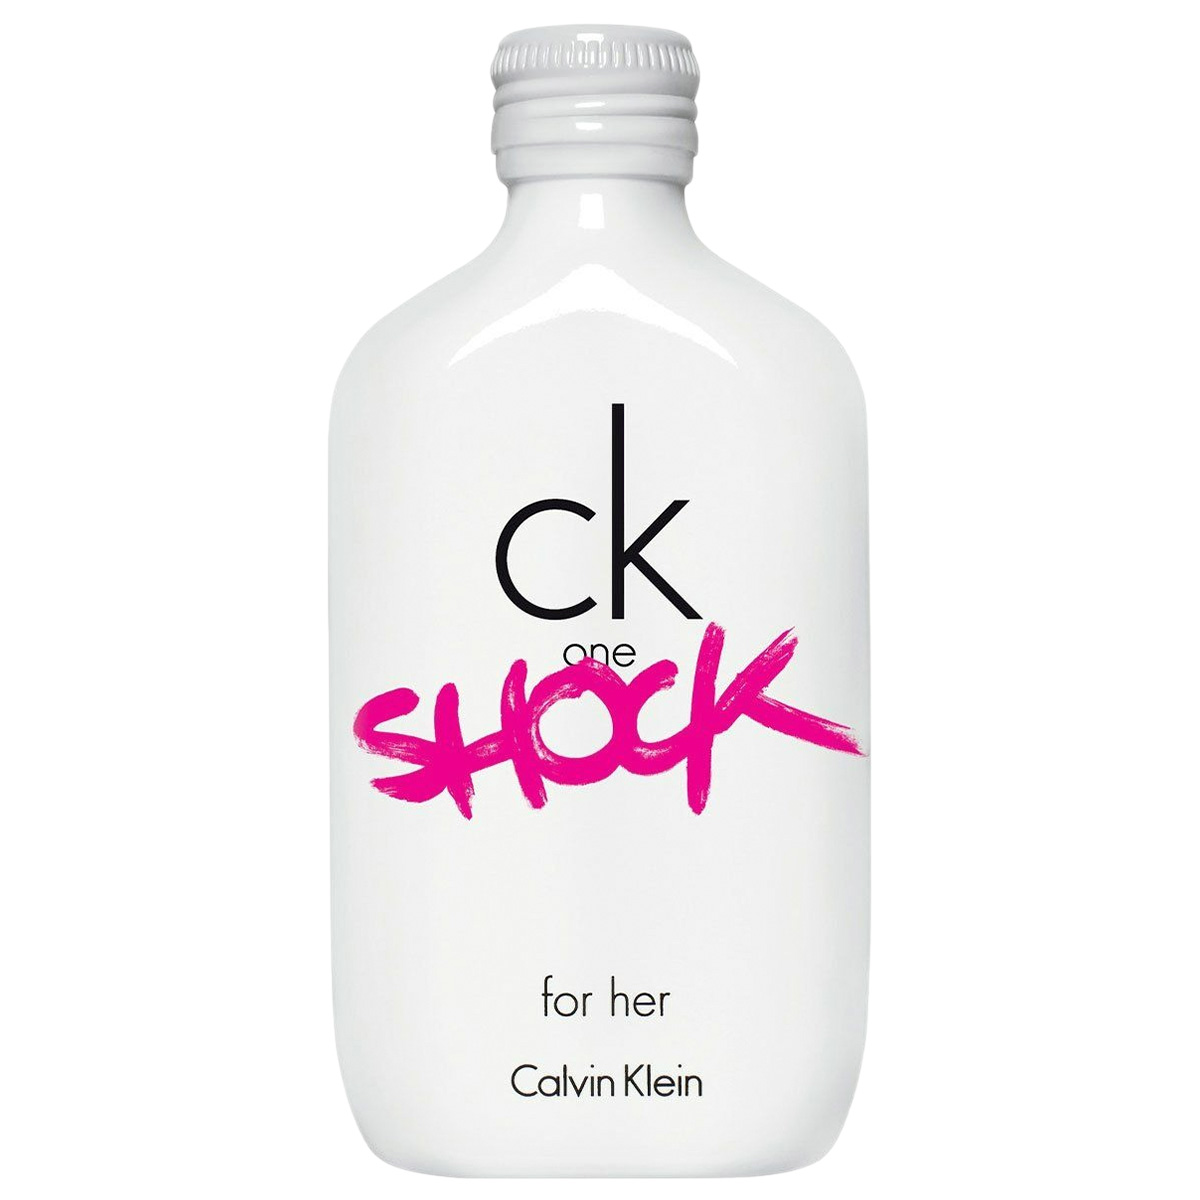 Calvin Klein CK One Shock For Her Eau de Toilette